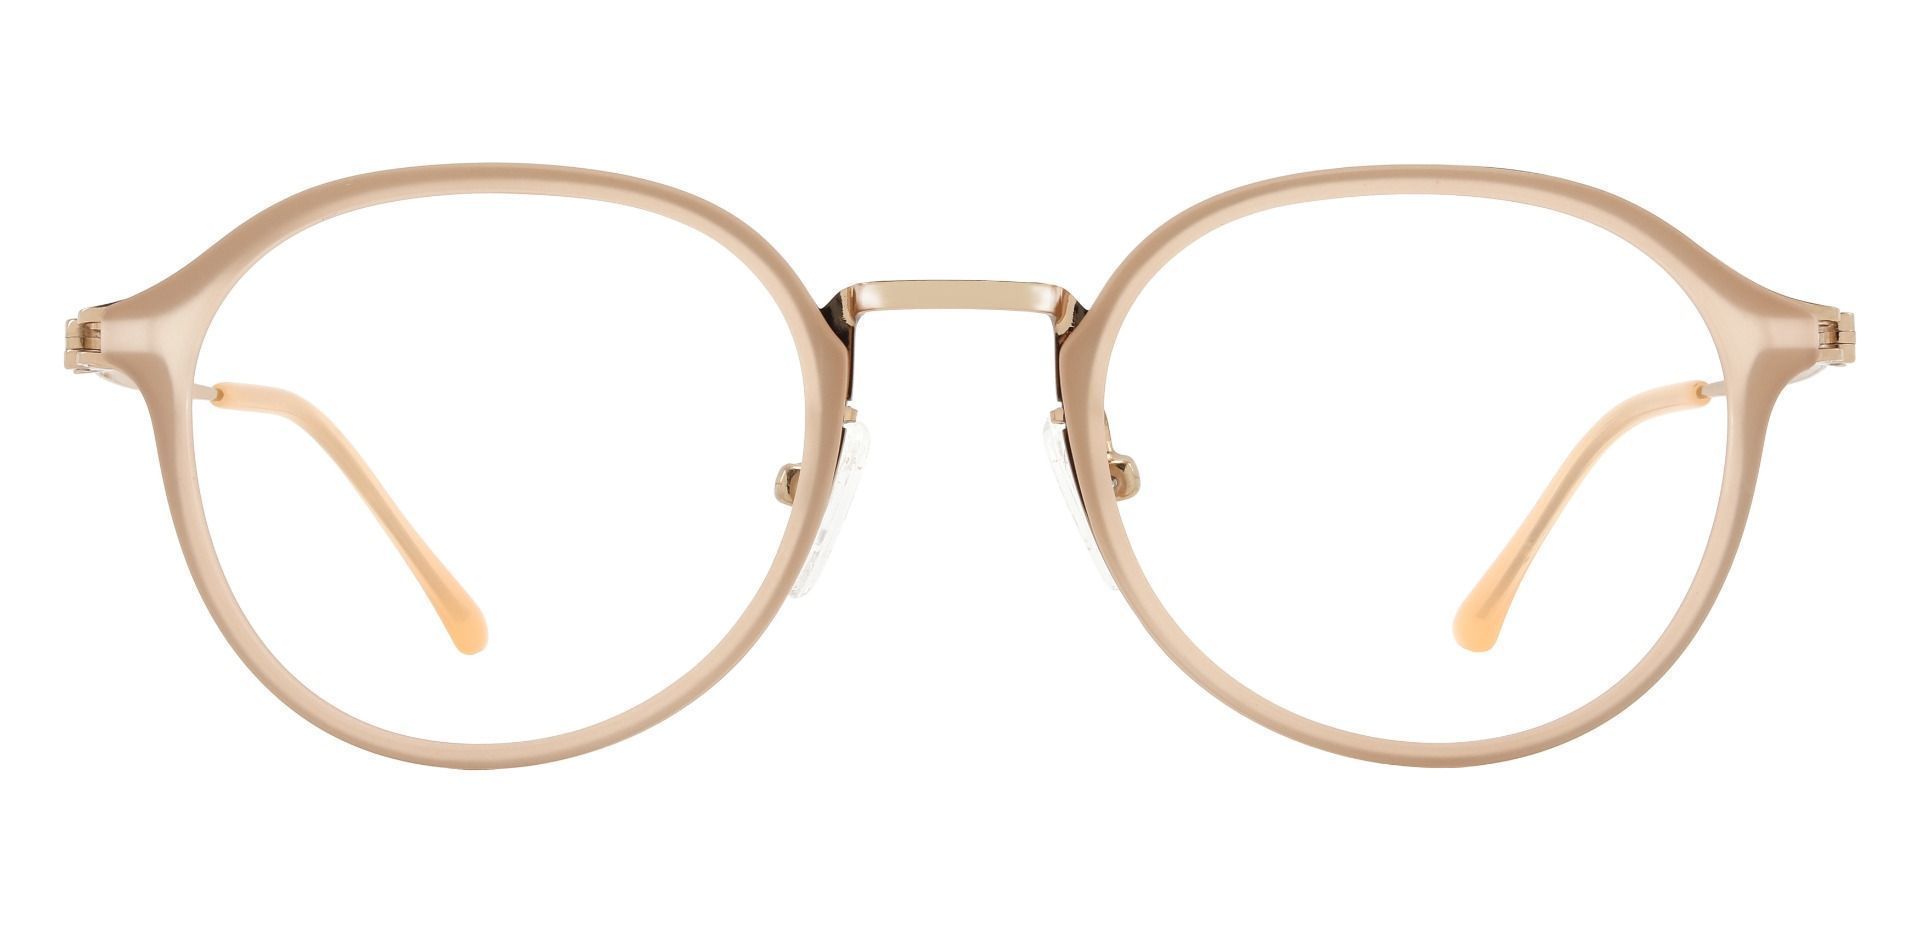 Billings Round Progressive Glasses - Brown